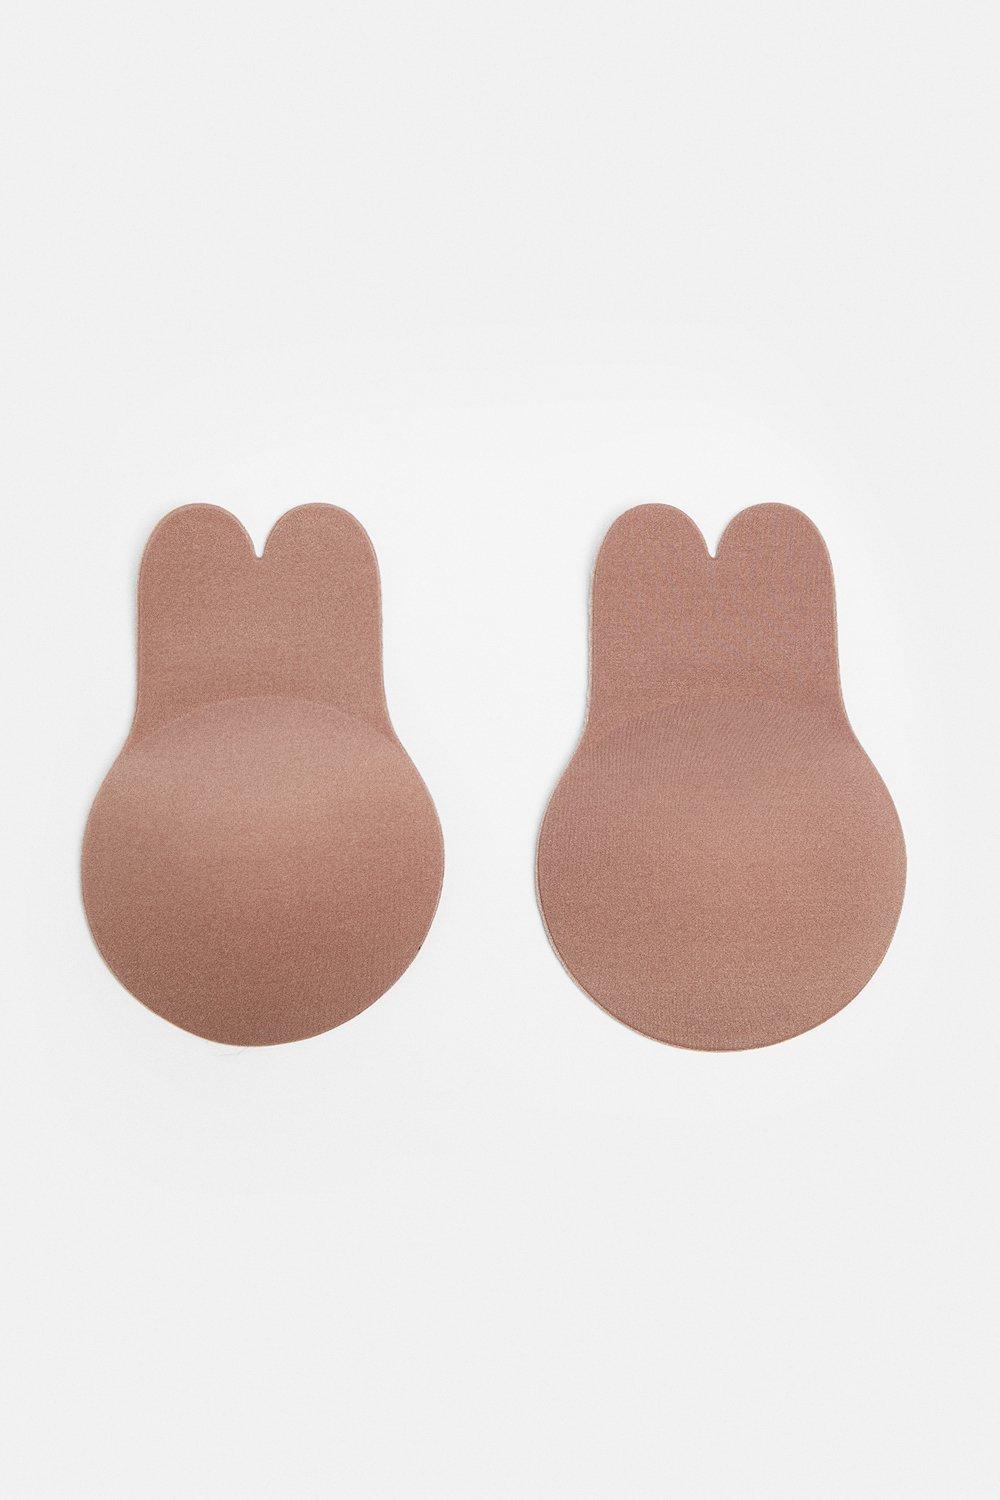 Rabbit Breast Lift Nipple Cover